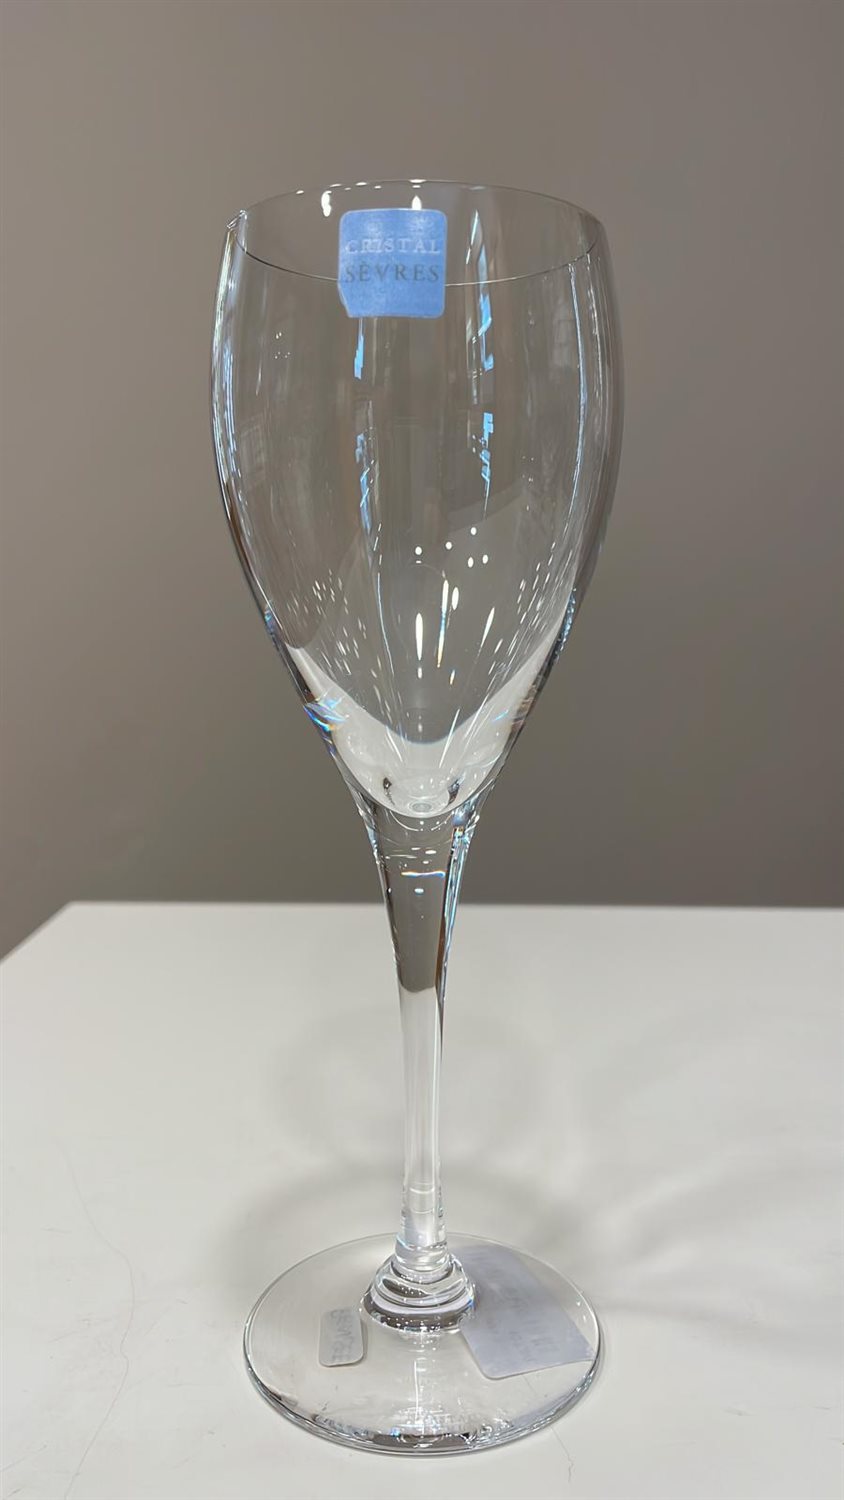 Oiritaly Bicchiere - Cristal Sèvres - PENSEE - PENSEE - Cristallo